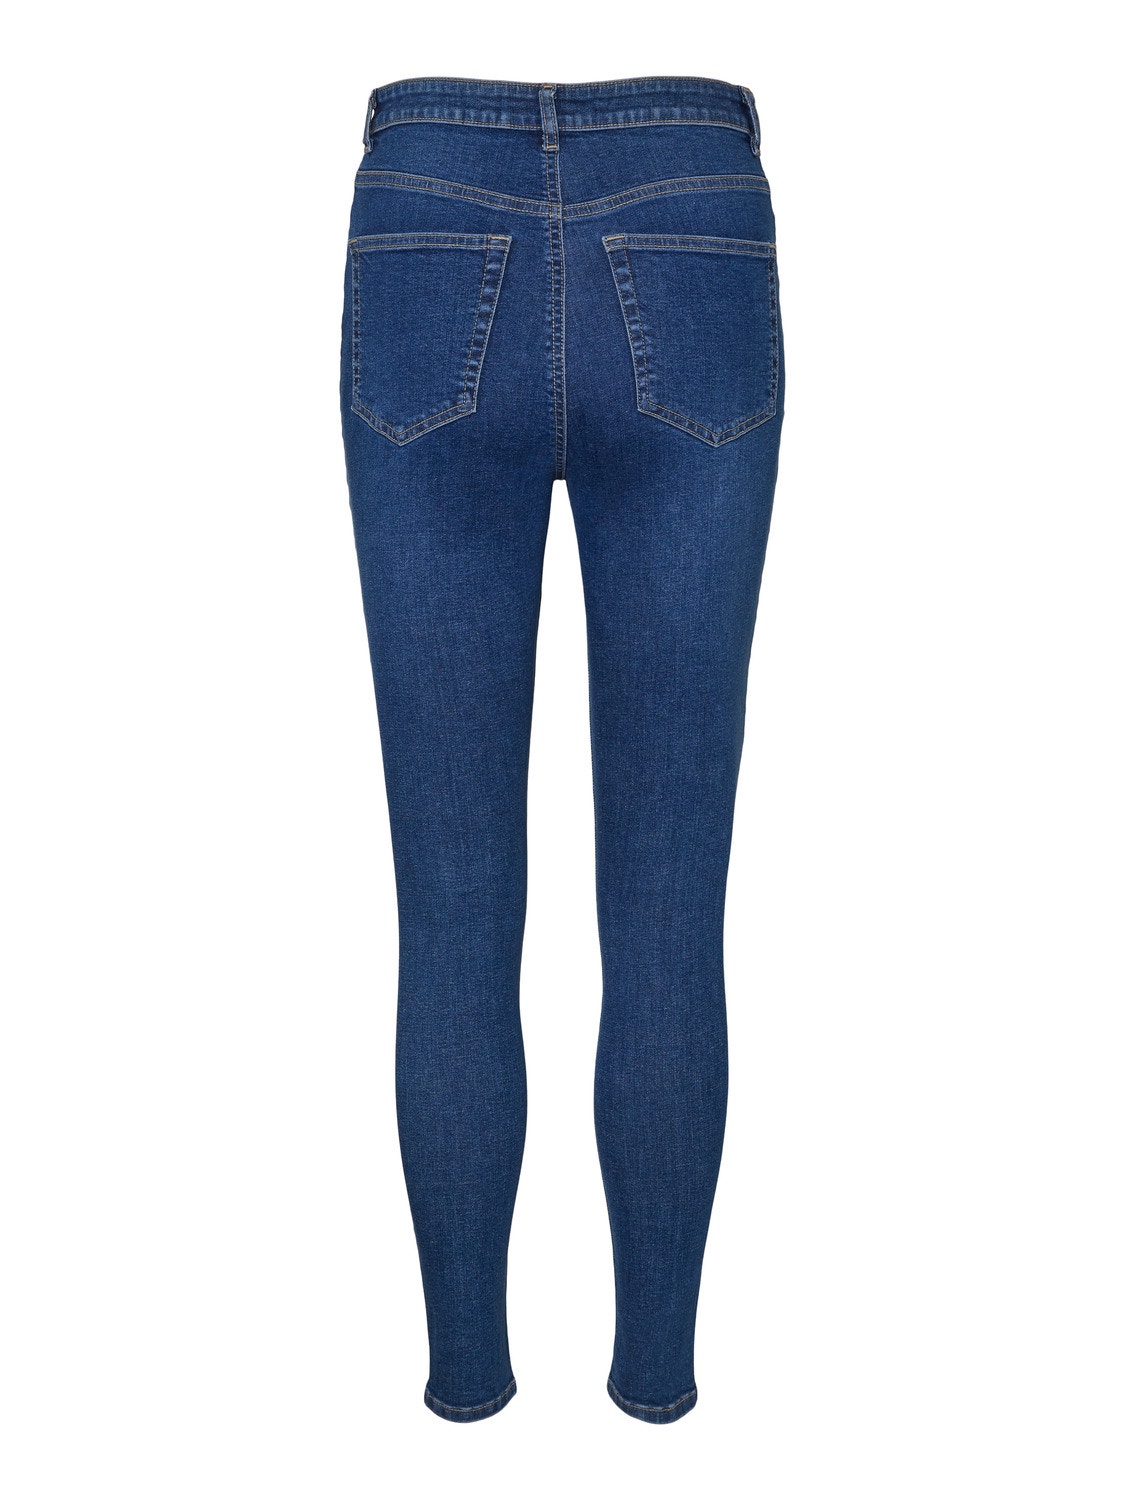 Vero Moda VMSANDRA Super High Rise Skinny Fit Jeans -Medium Blue Denim - 10227316